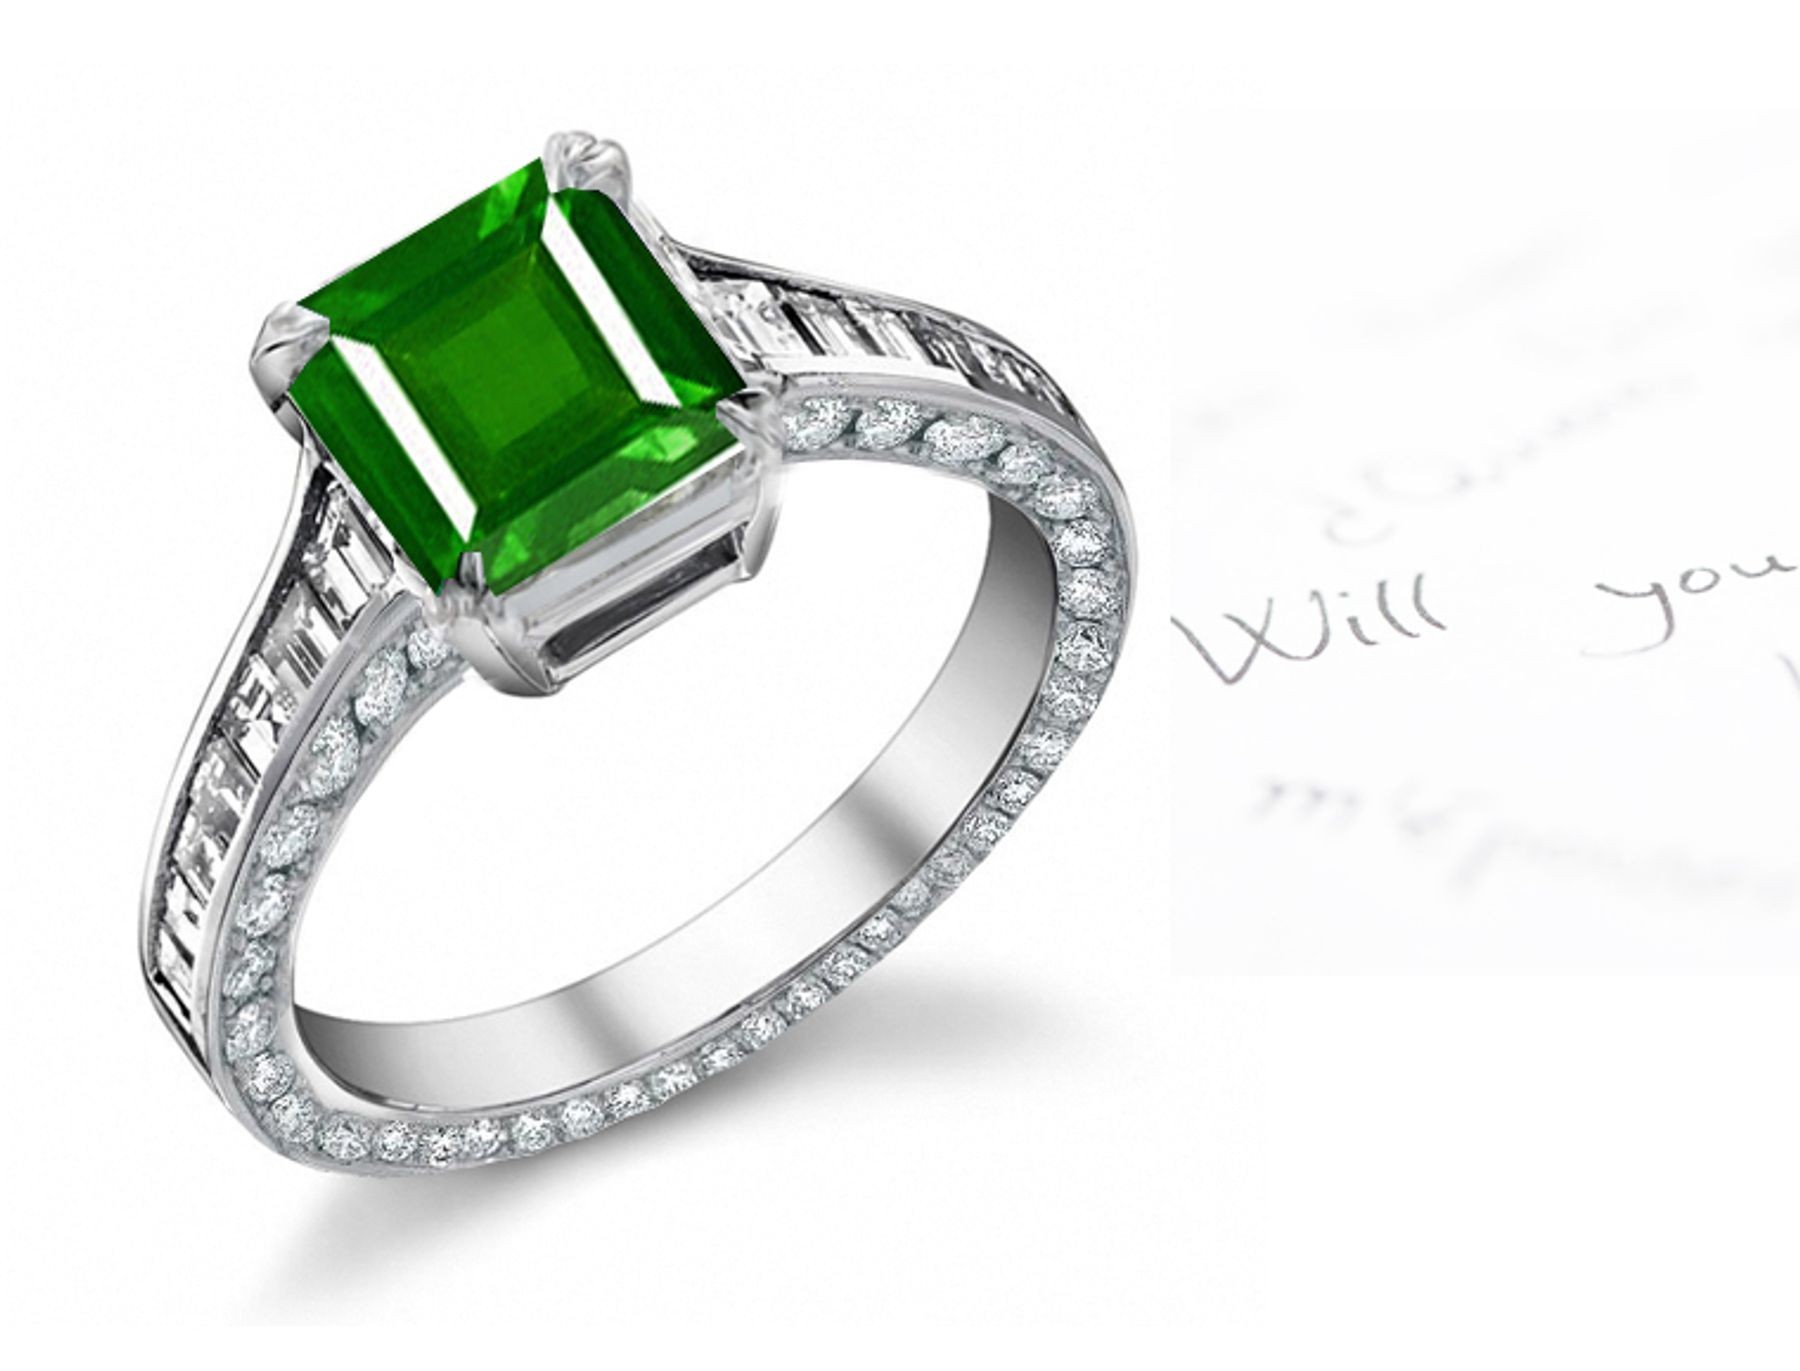 Choice Assortment: Graceful Princess Cut Emerald & Baguette Diamond Halo Ring in 14k 18k White Gold 